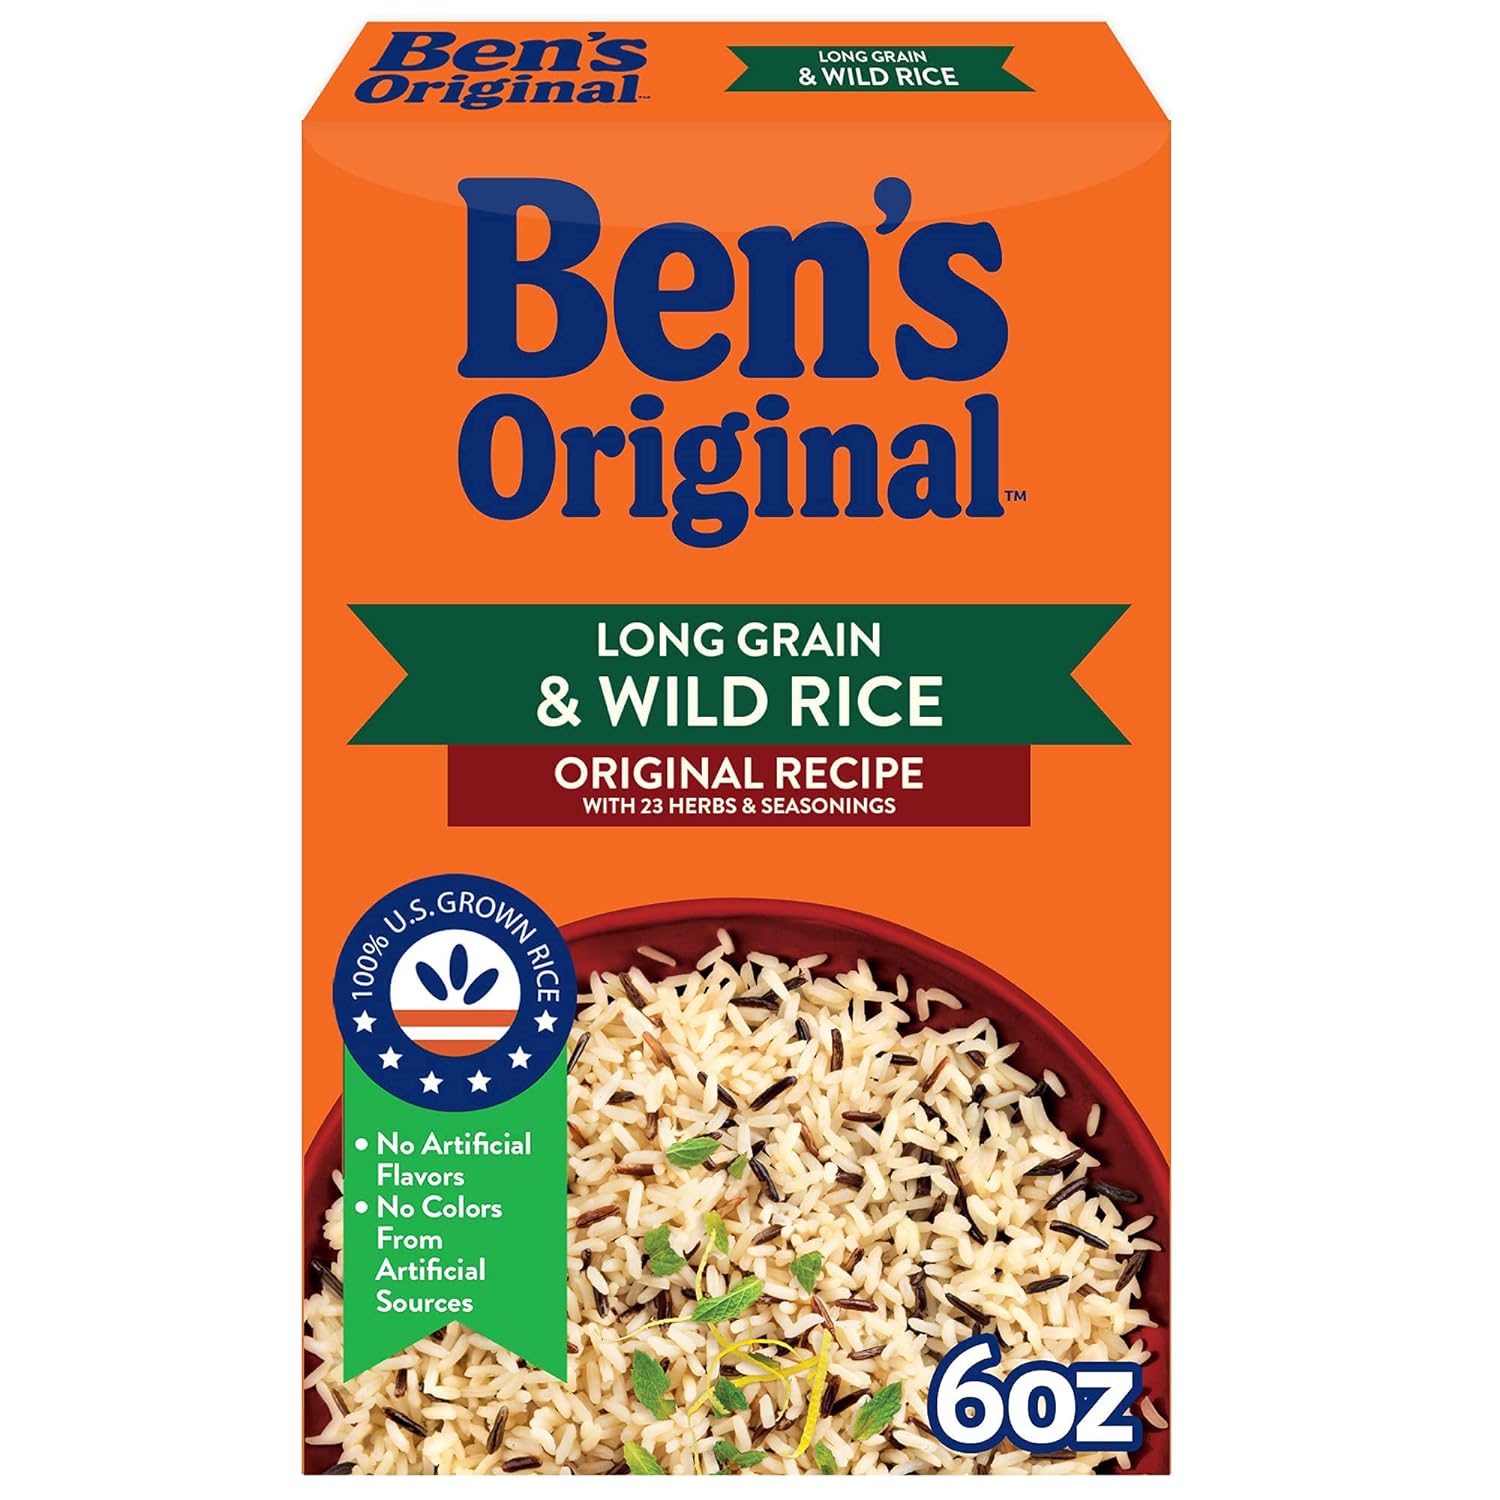 BEN'S ORIGINAL Flavored Long Grain Rice & Wild Rice, Boxed Rice, 6 oz Box (Pack of 12)